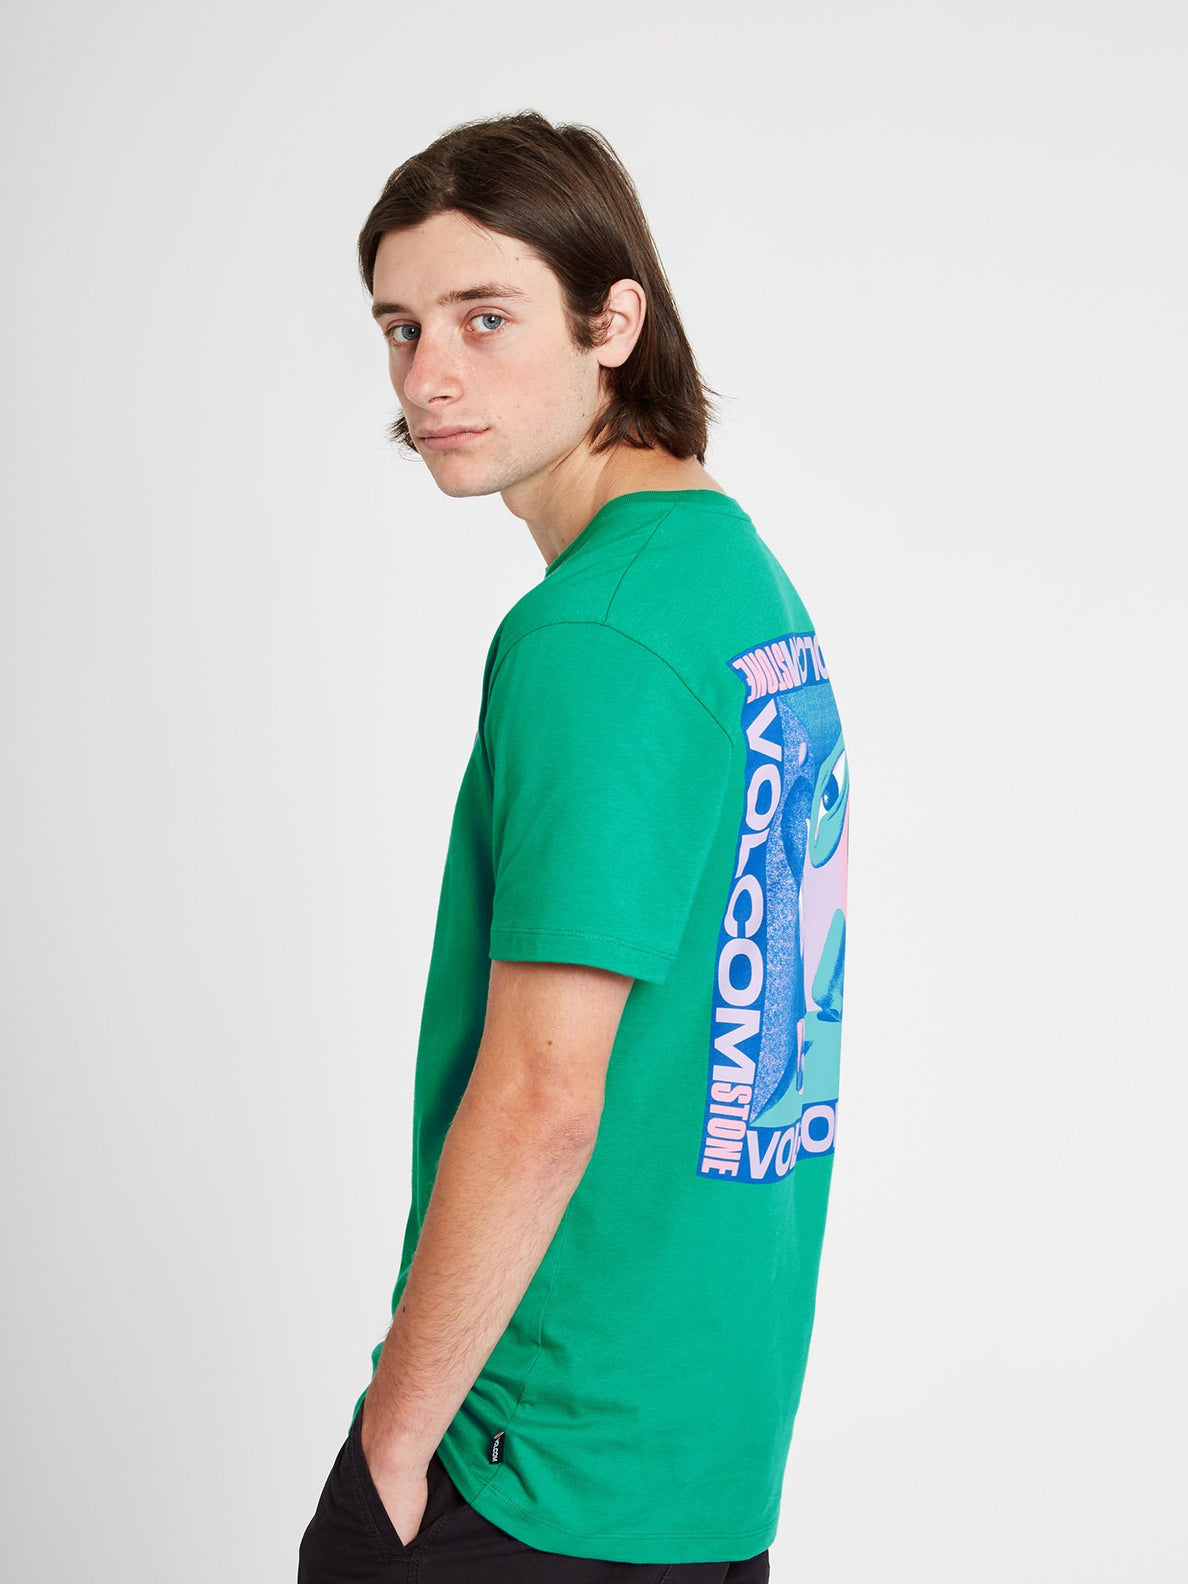 M. Loeffler 2 T-shirt - Synergy Green (A5212115_SYG) [9]